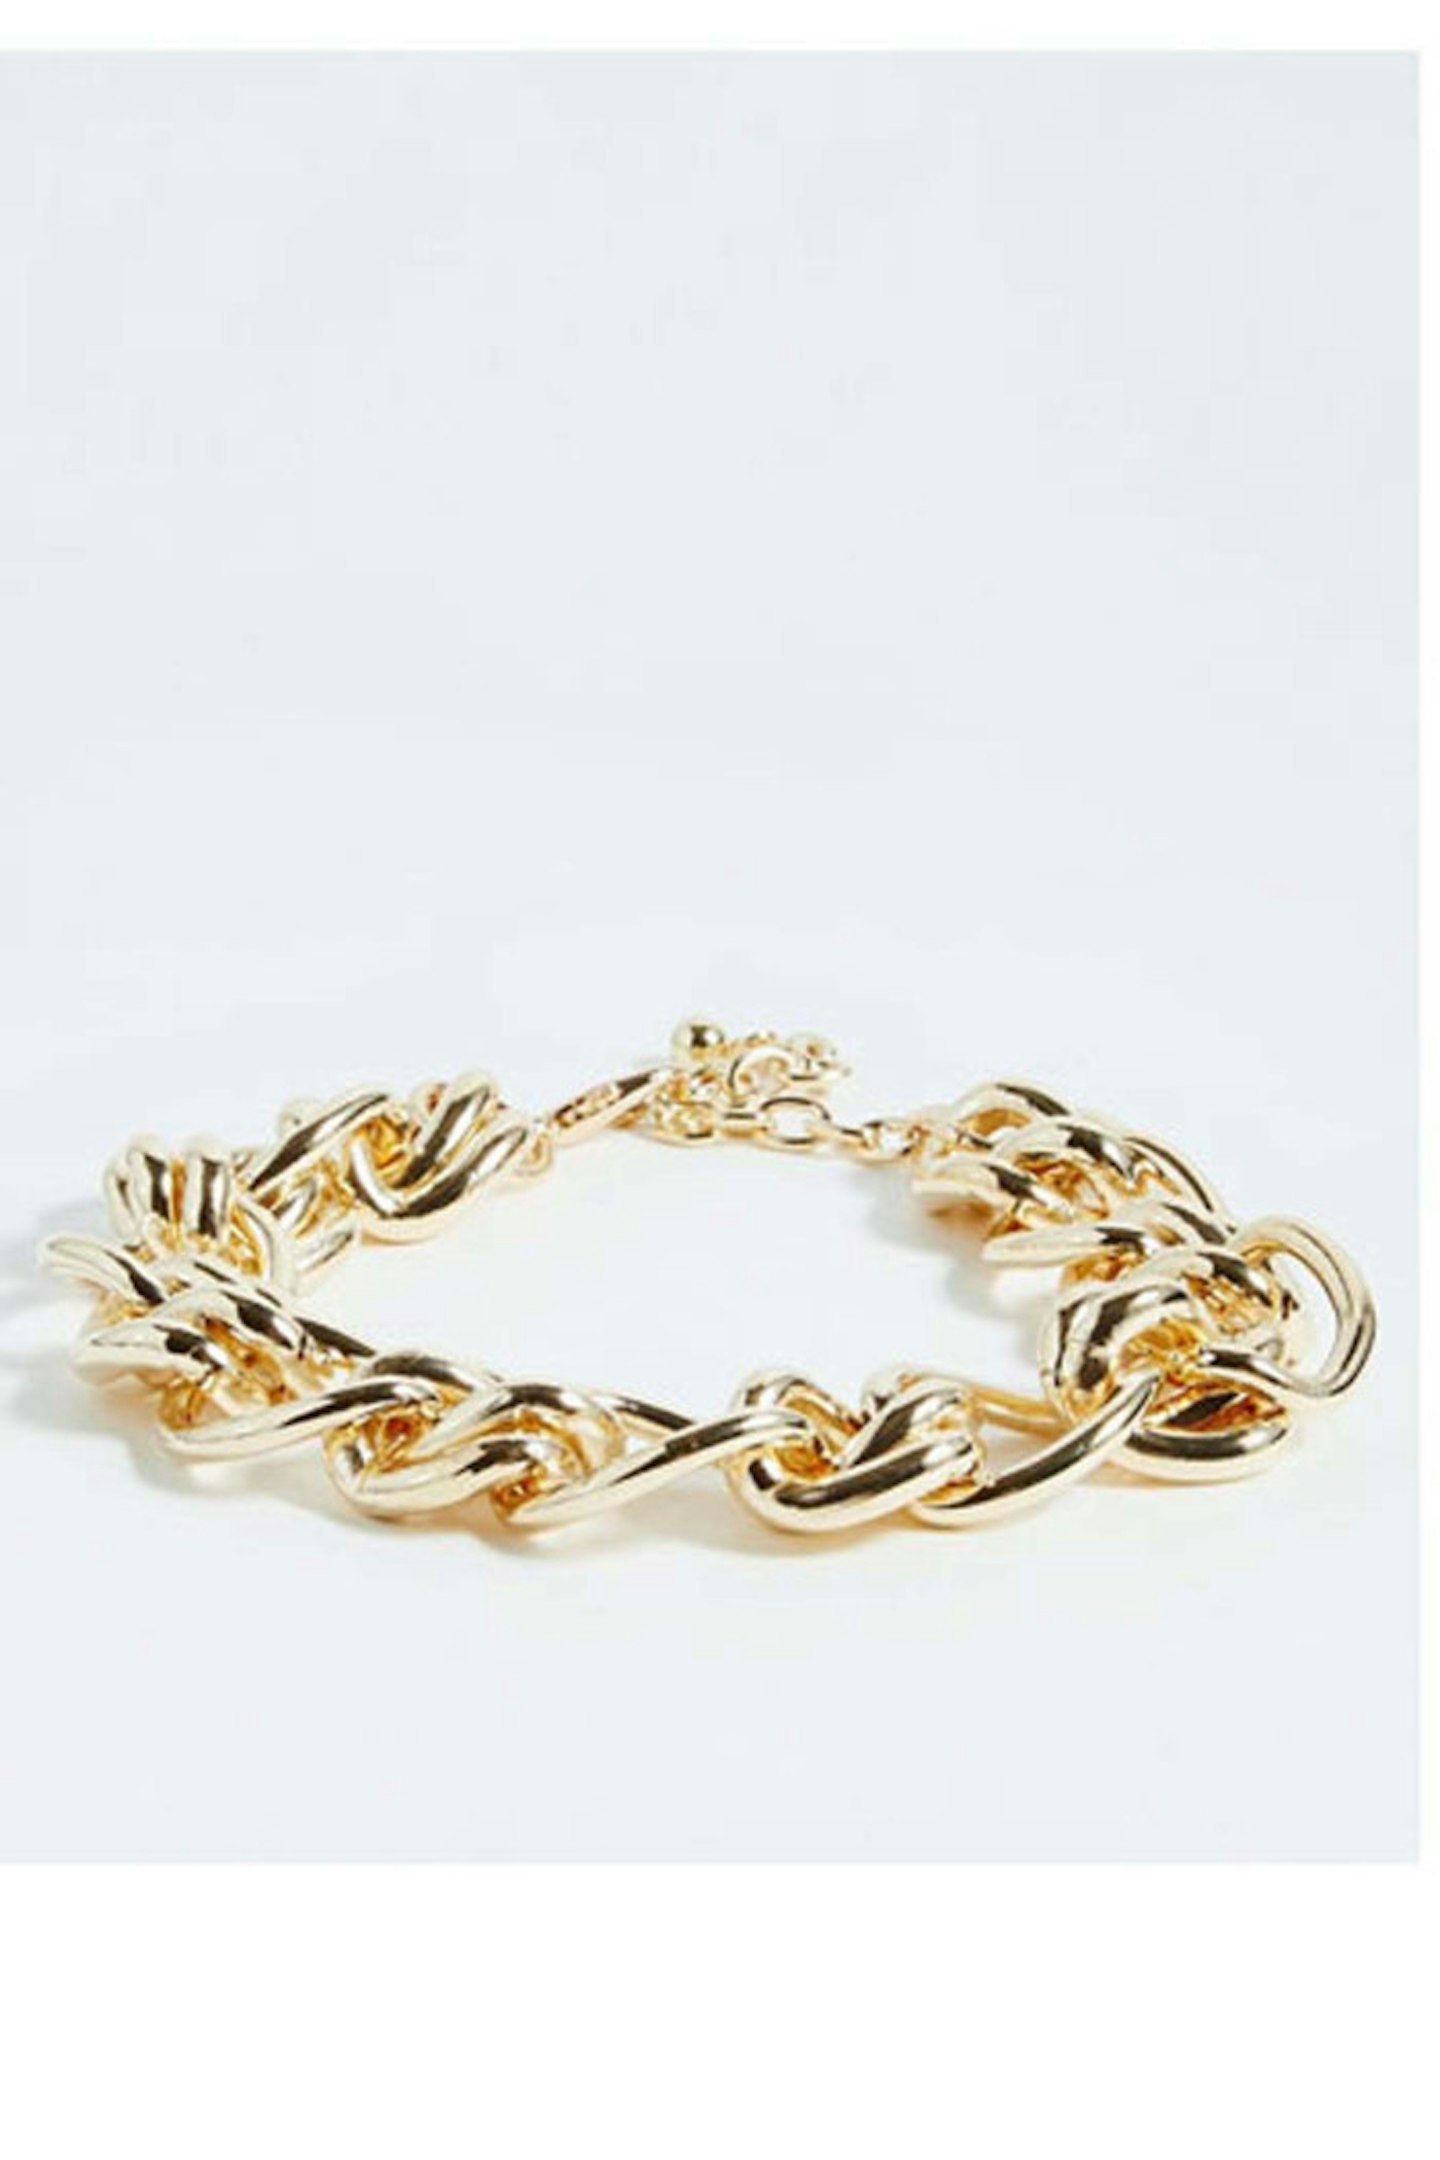 Chain Necklace, £15, ASOS.com